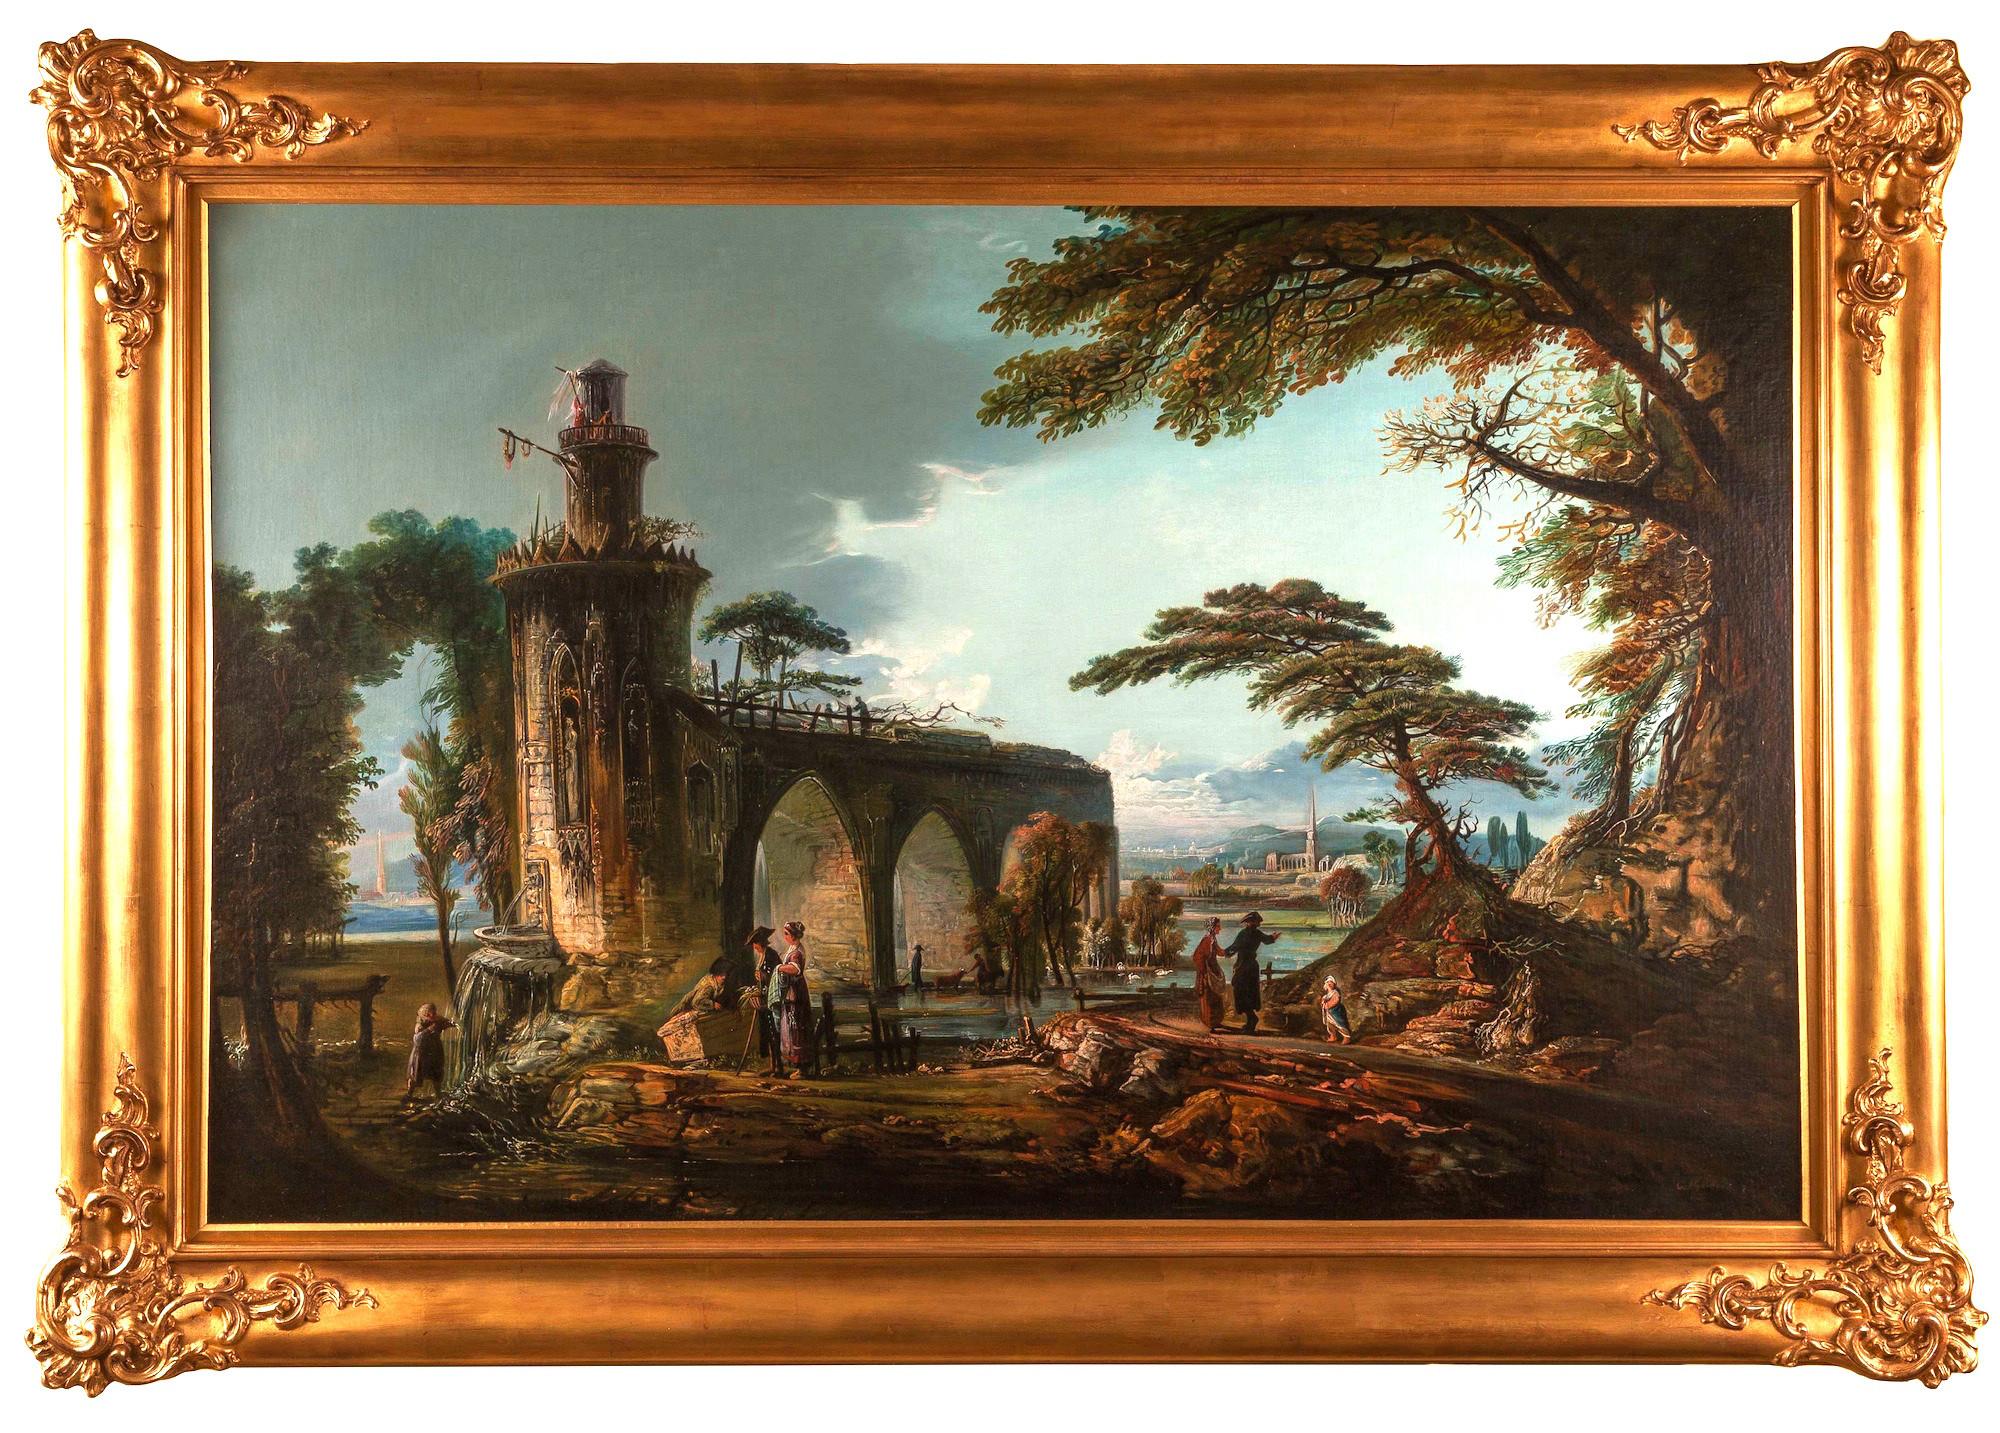 Claude Lorrain (circle of) Landscape Painting - Oil painting; Italian Landscape in the style of Claude Lorraine (1600-1682). 